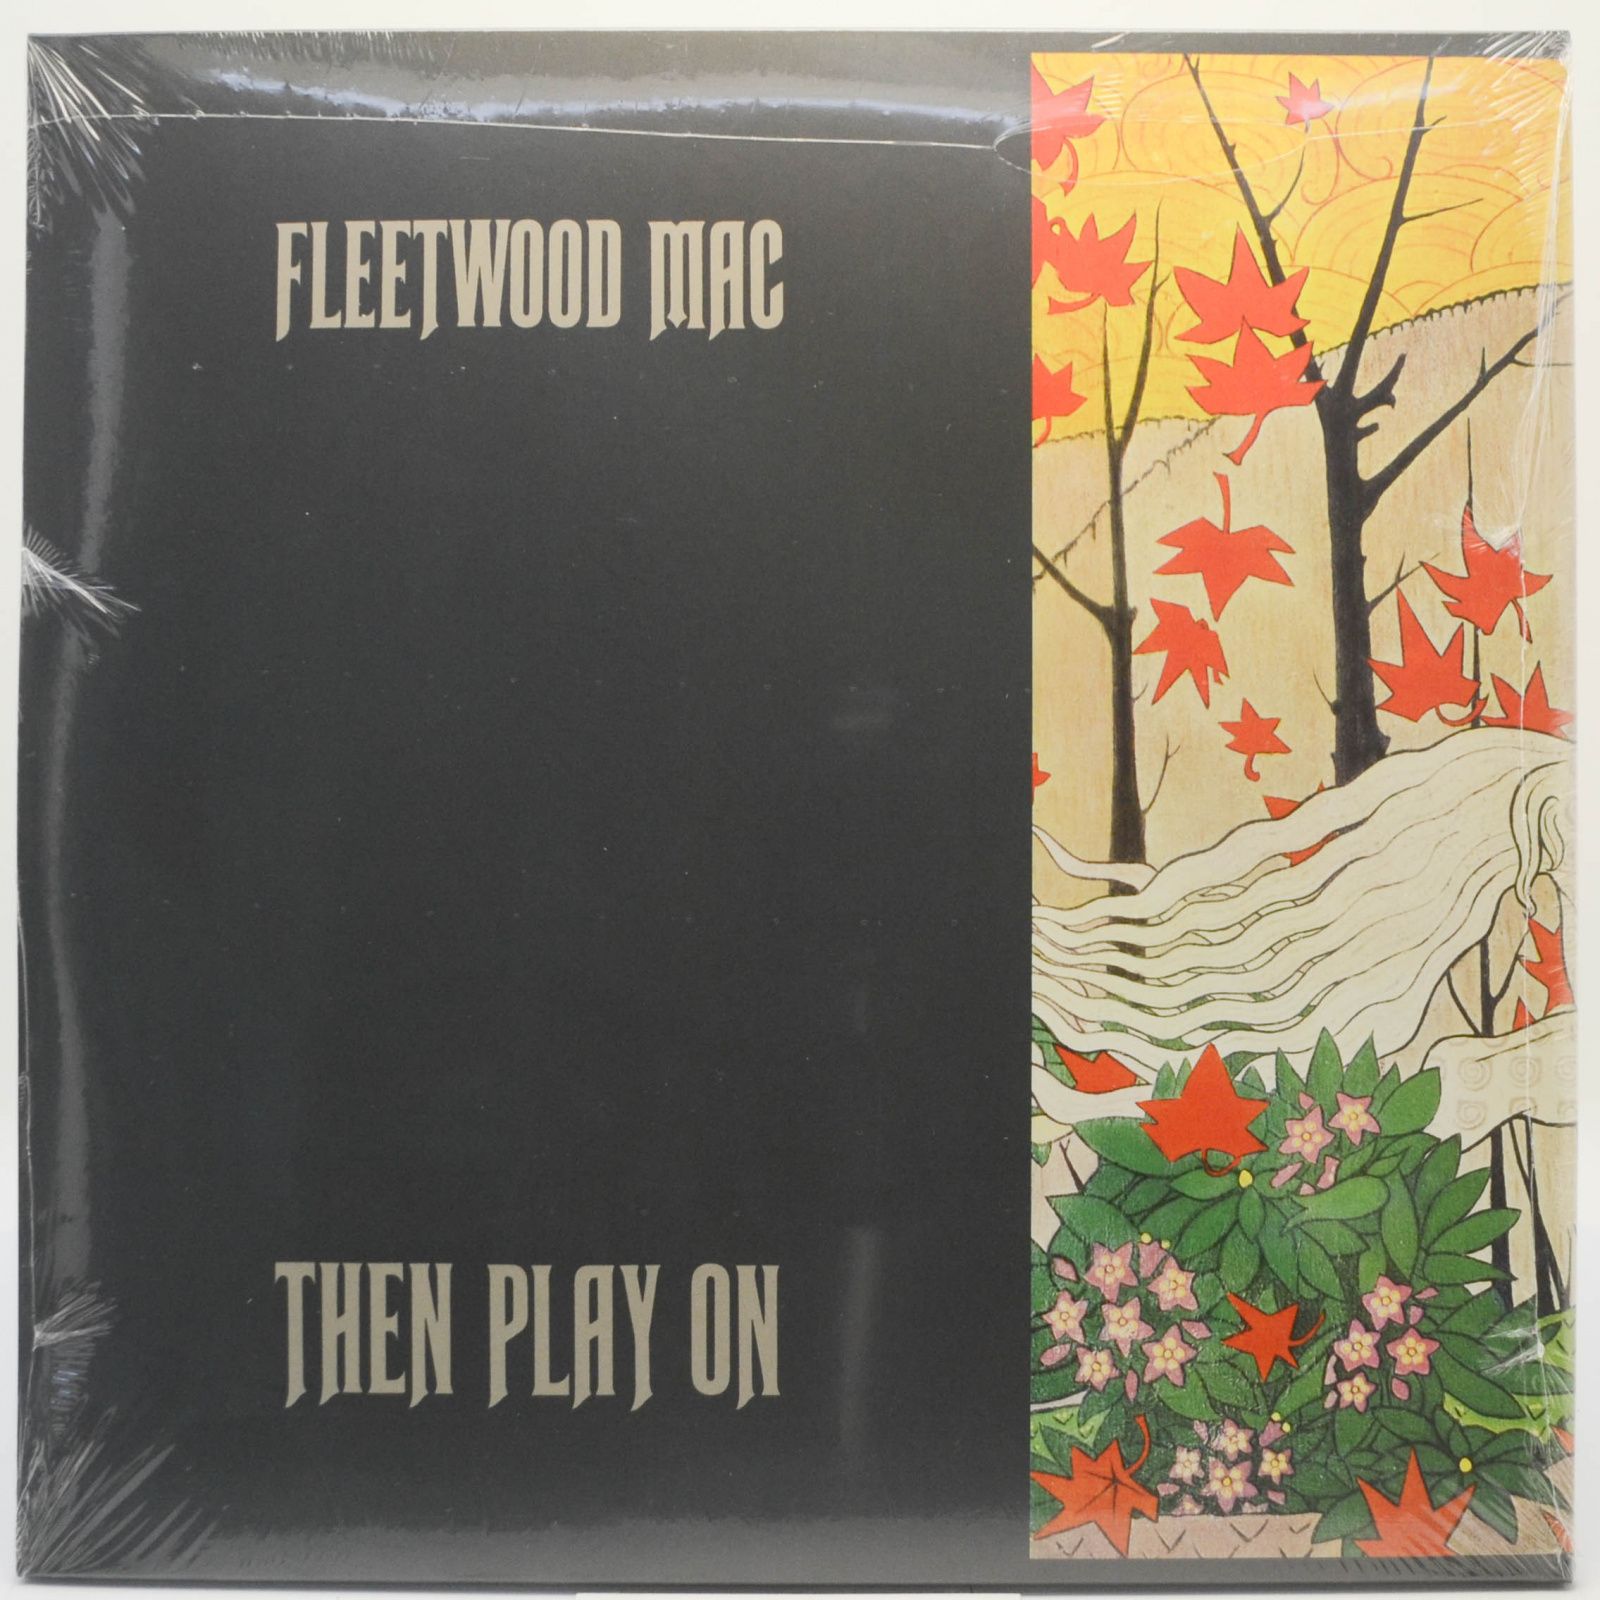 Fleetwood Mac — Then Play On, 2015